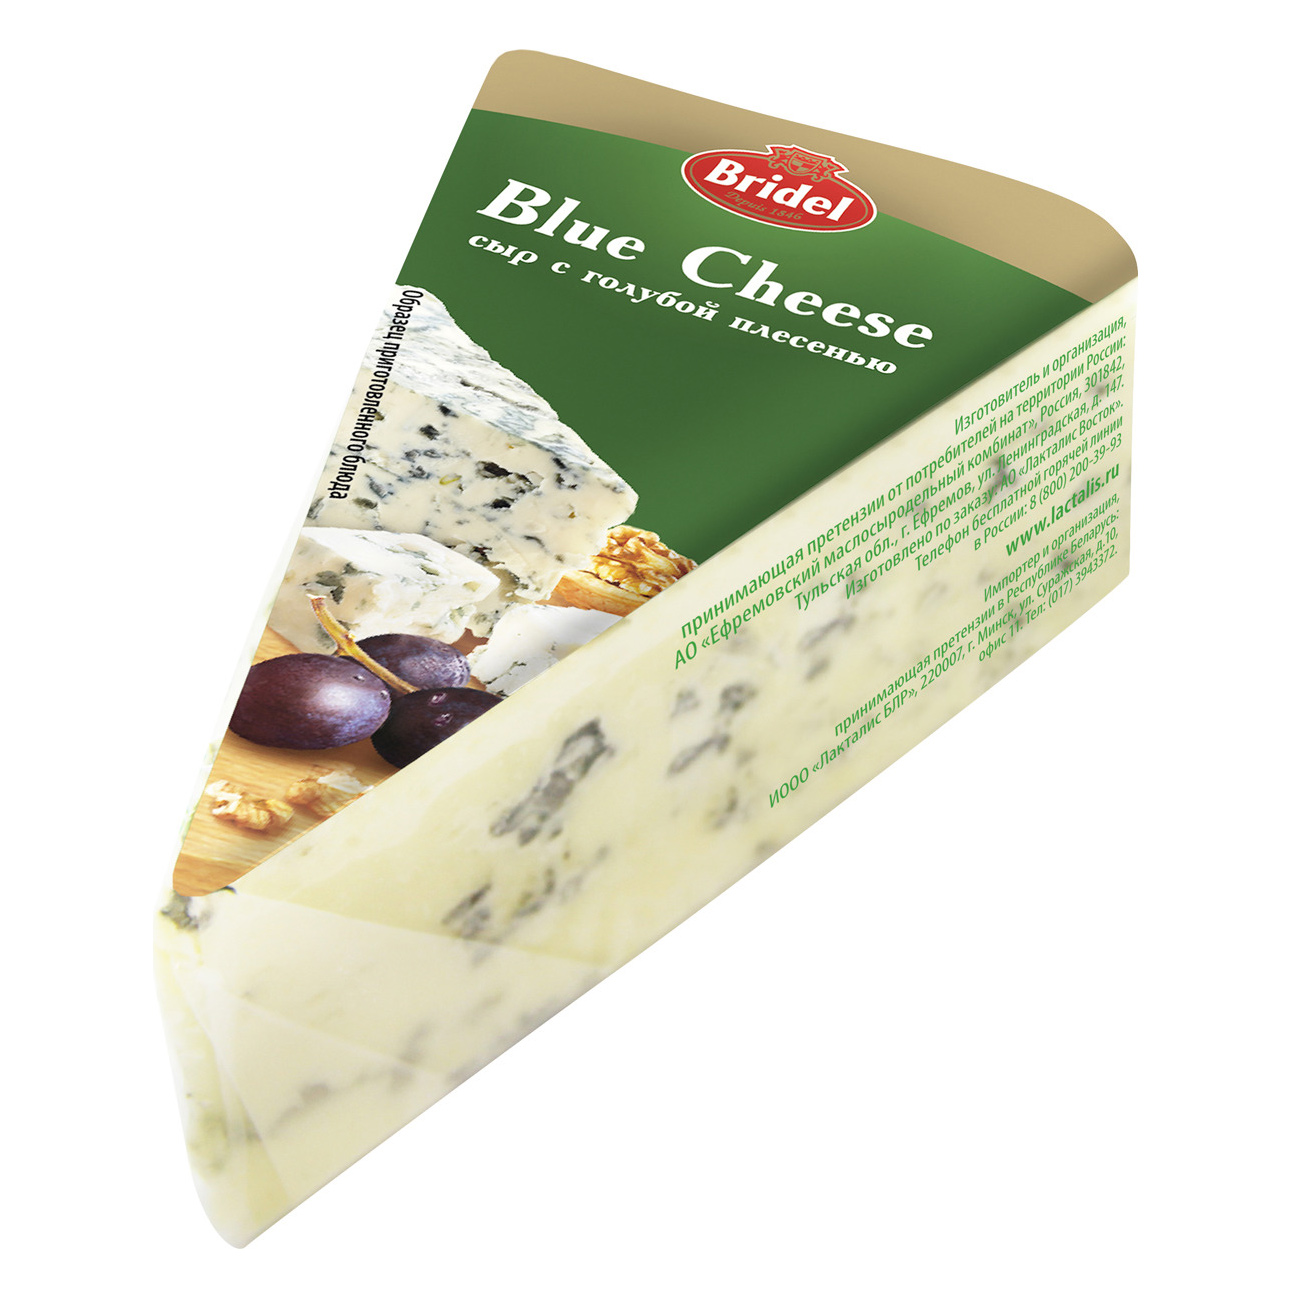 Сыр Bridel Blue Cheese с голубой плесенью 51% 100 г